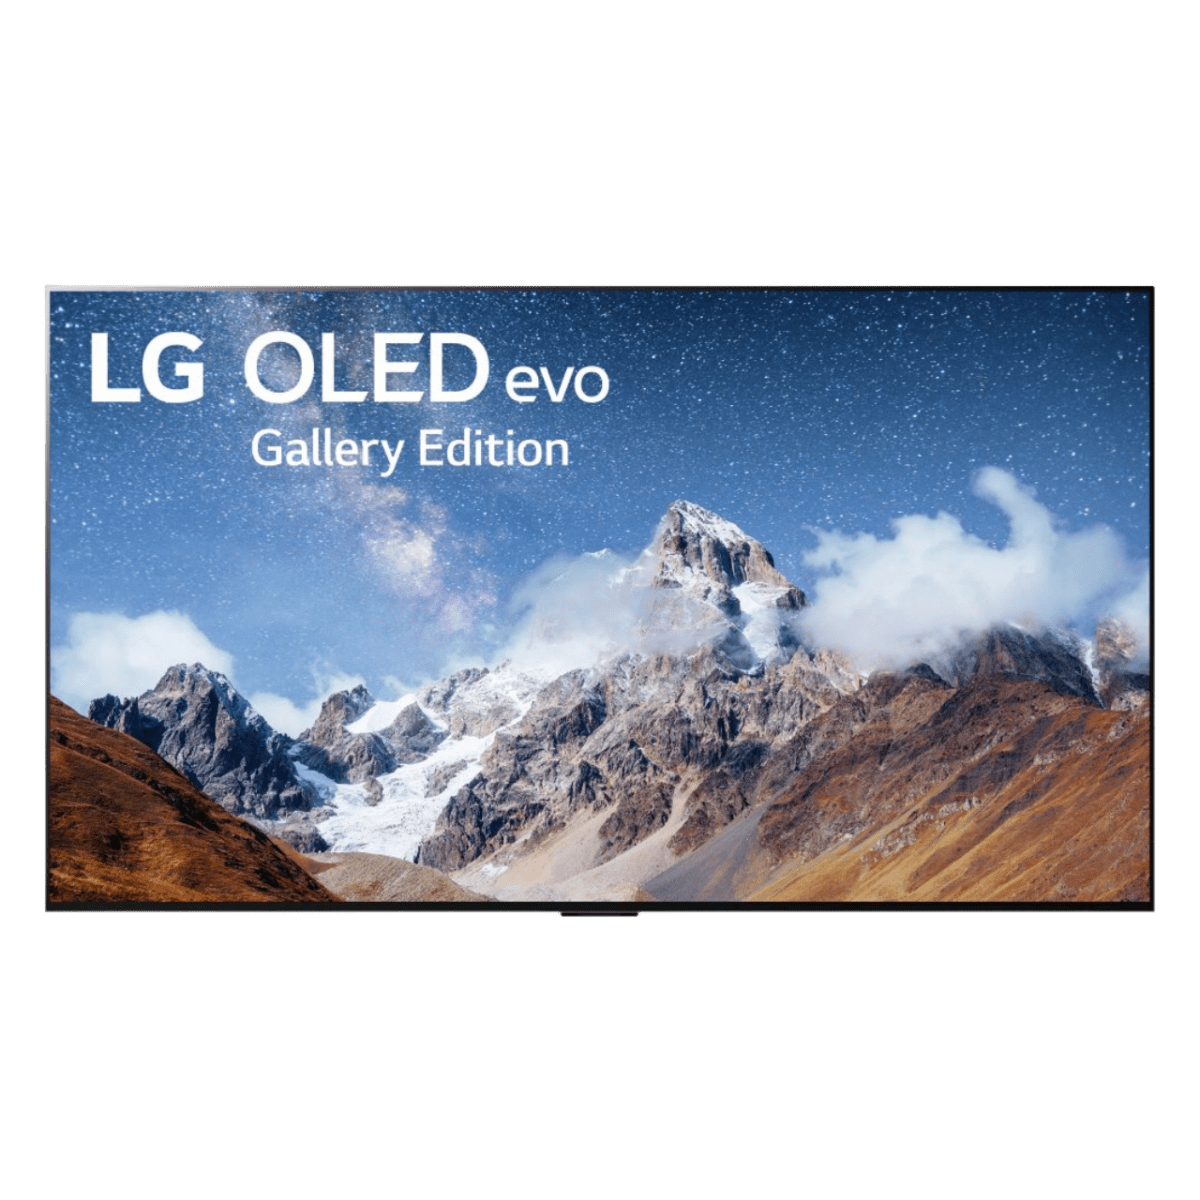 LG OLED65G2